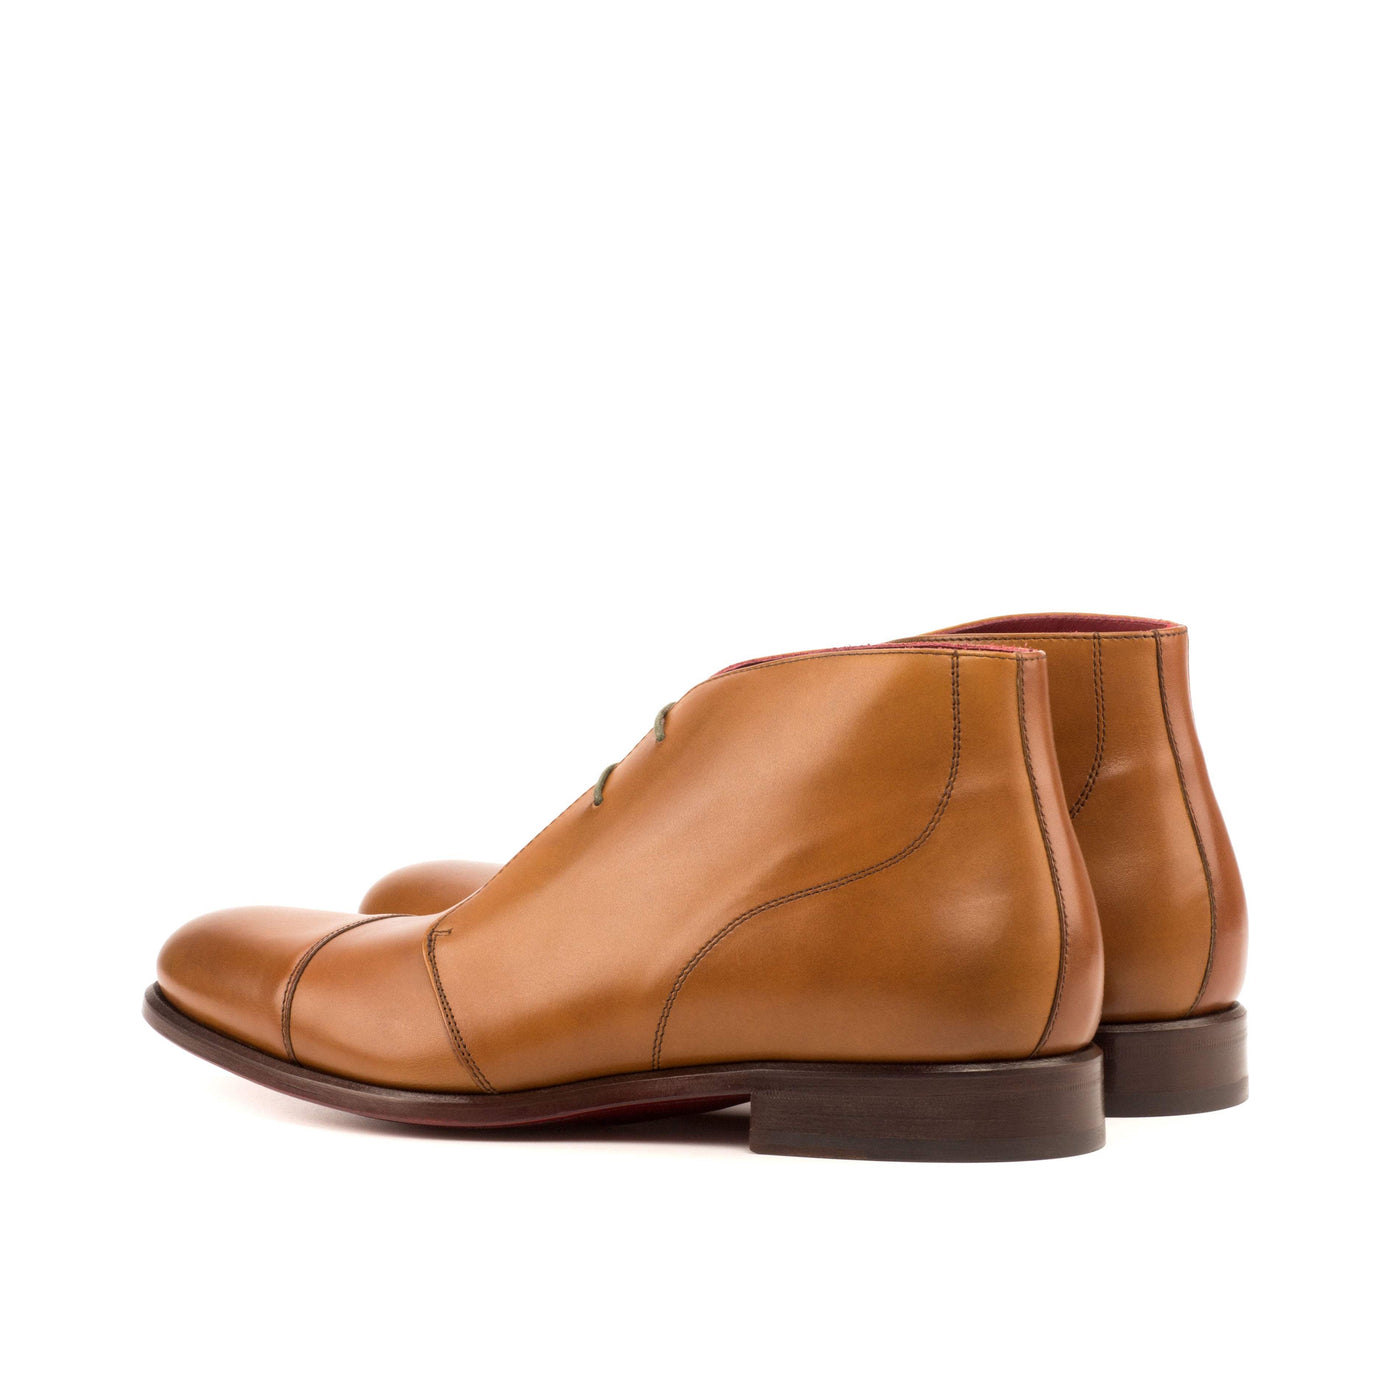 Men's Chukka Boots Leather Brown 3649 4- MERRIMIUM